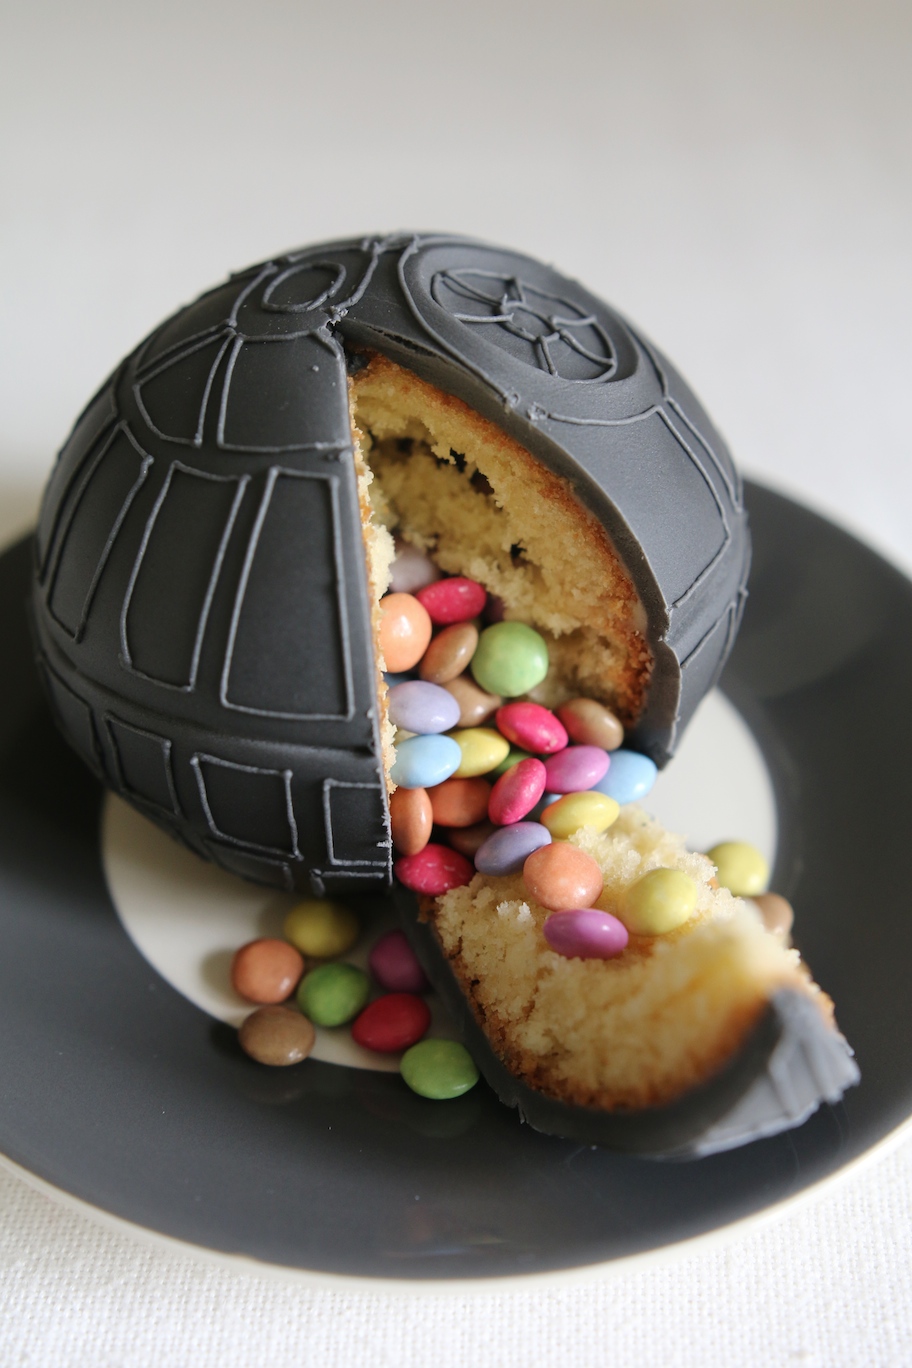 Star Wars Cake Afternoon Crumbs